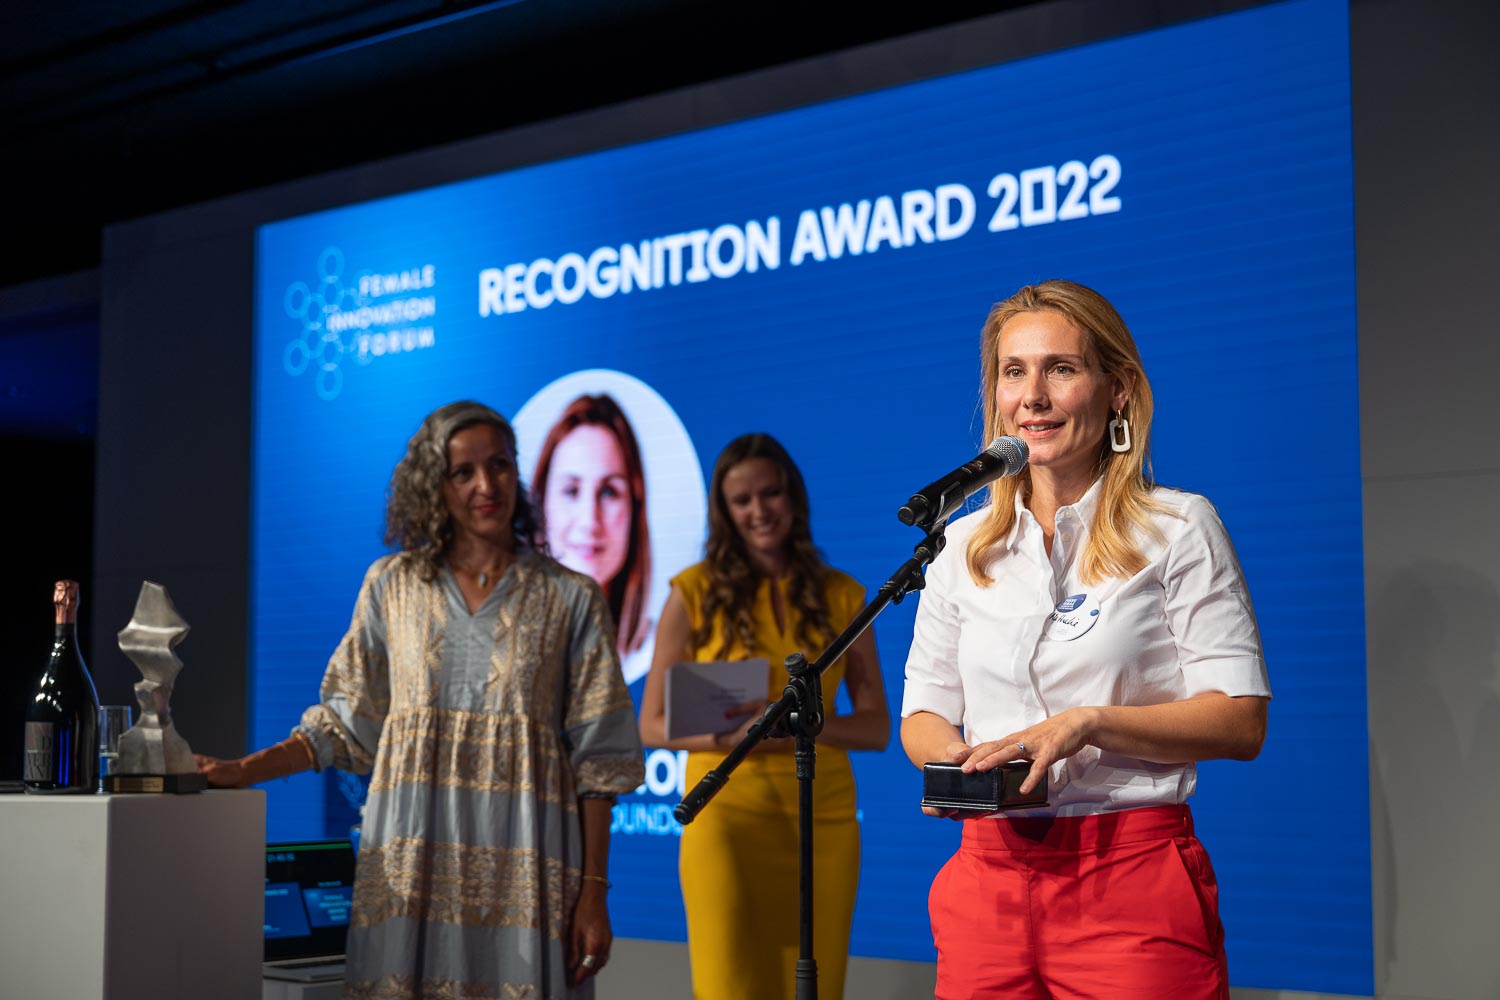 The Female Innovation Forum 2022